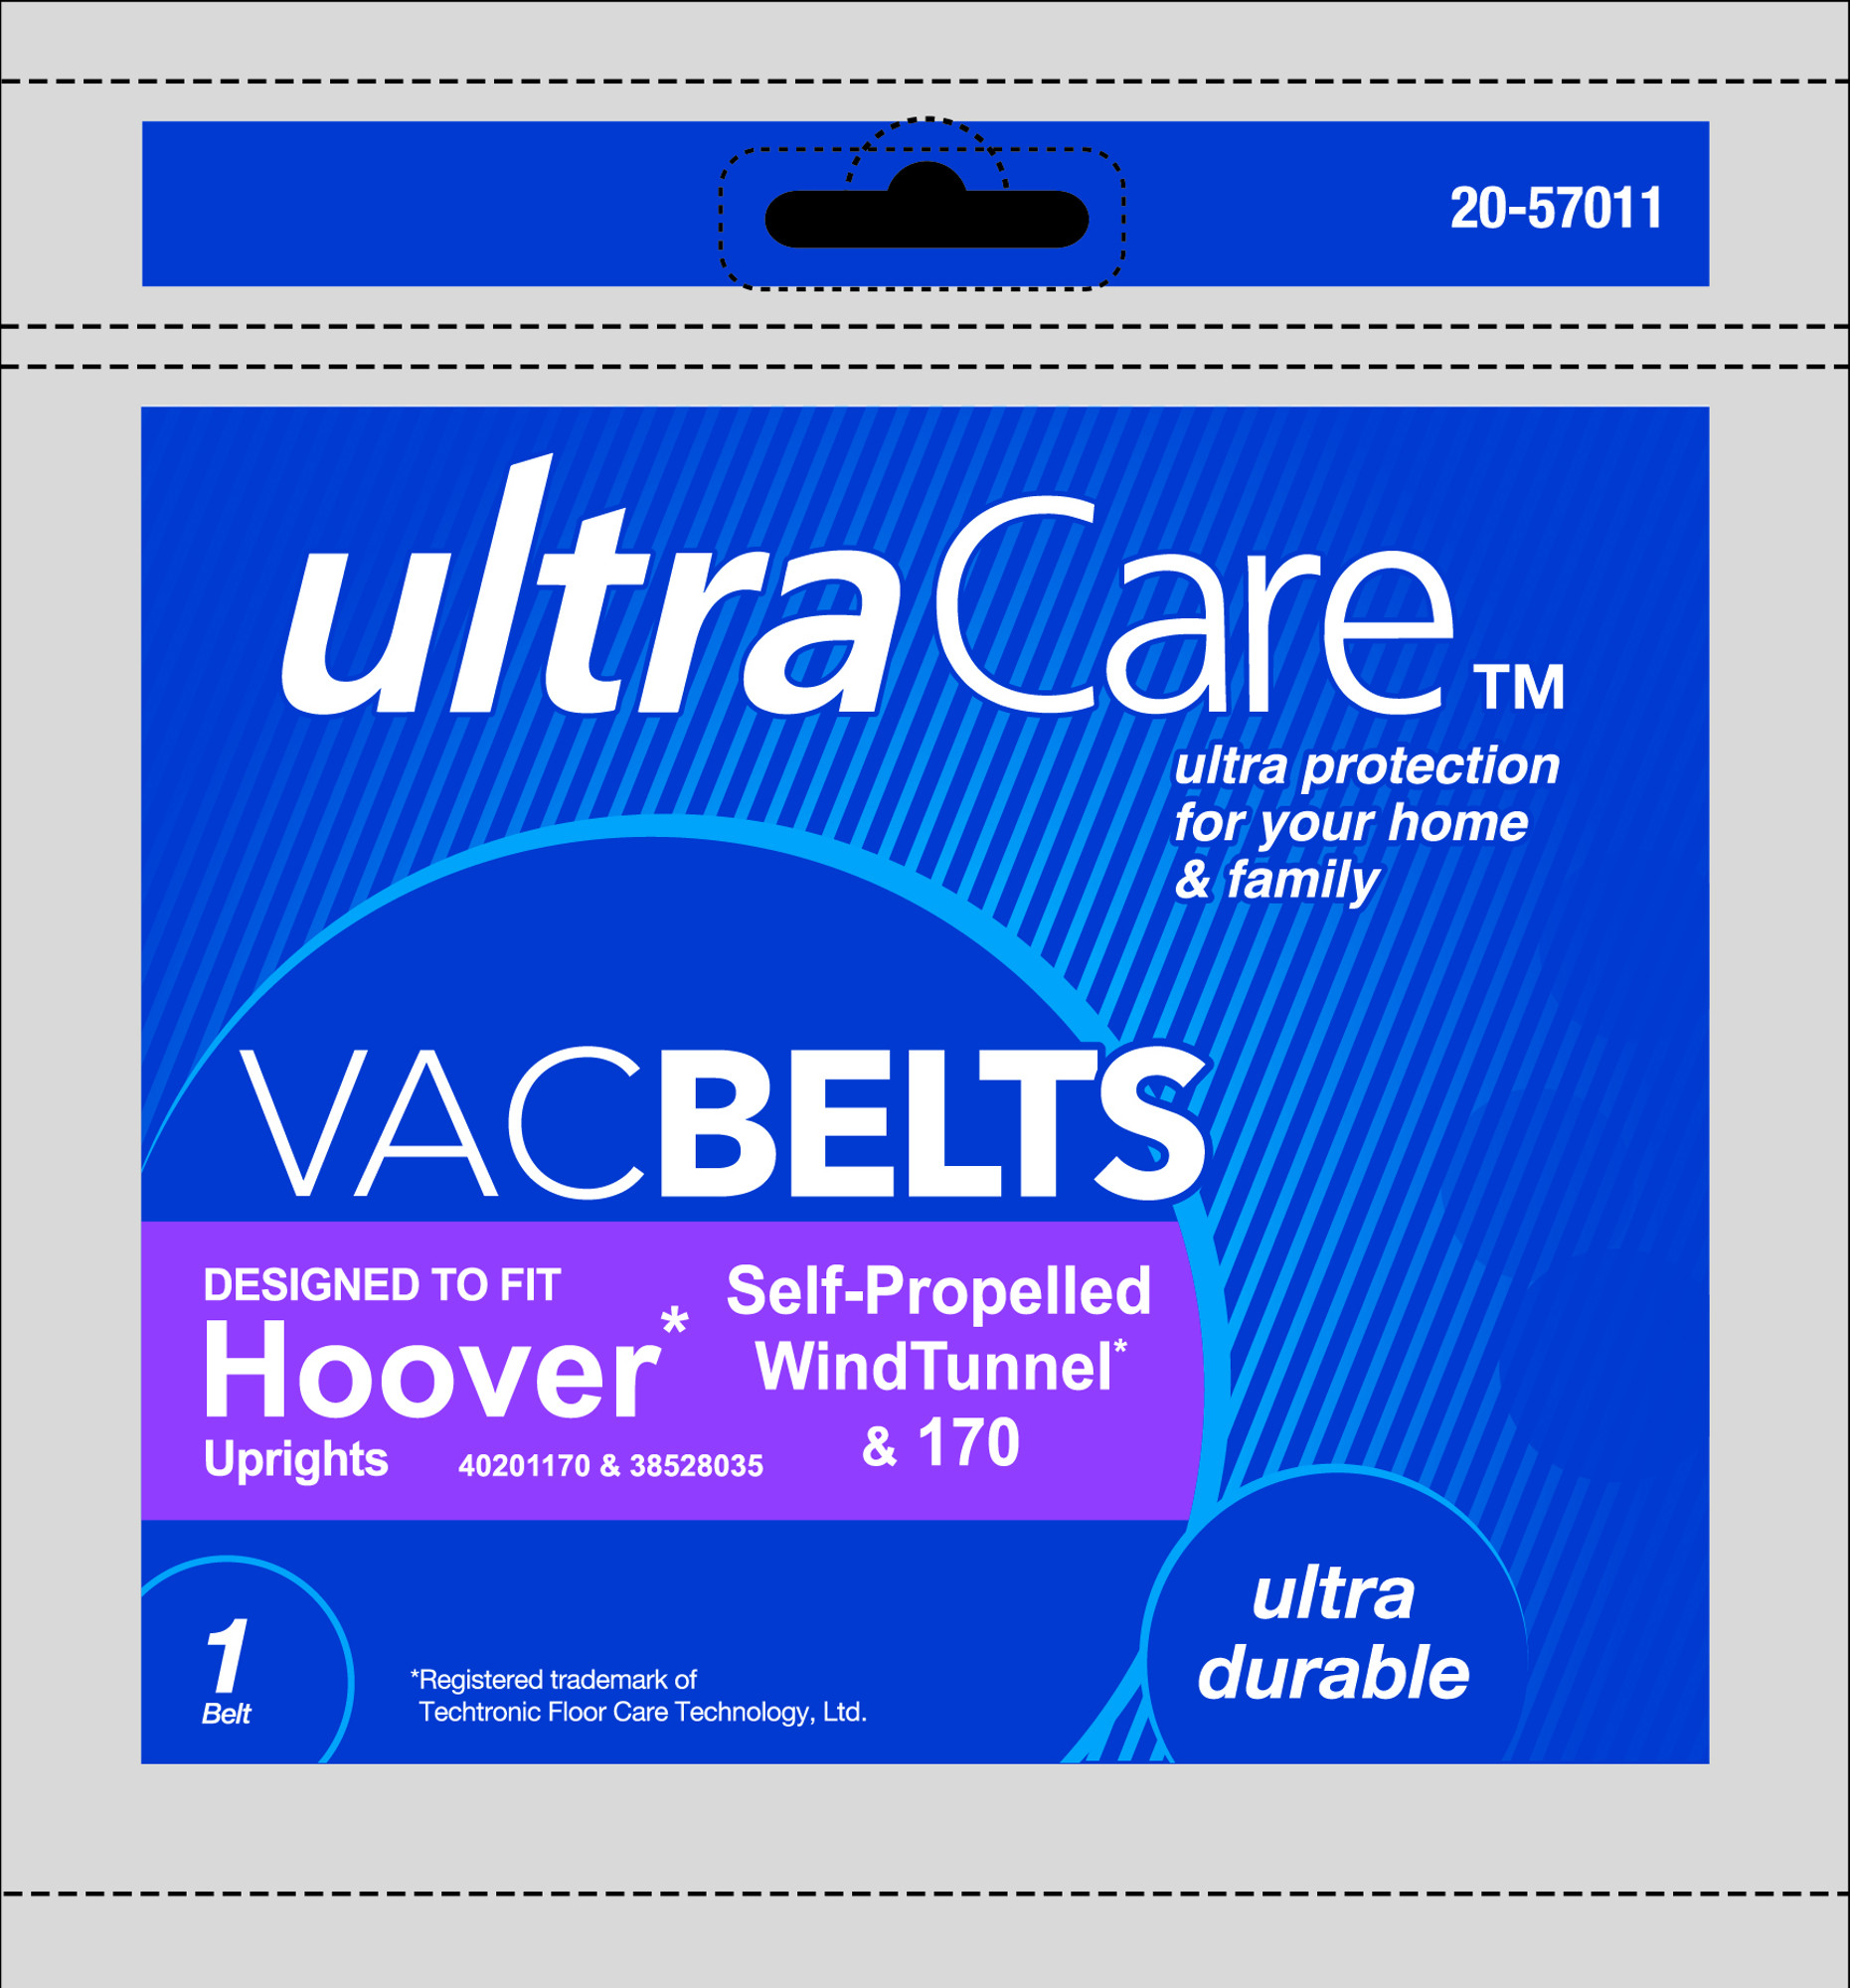 UltraCare UCB4170-6  Vacuum Belt for Hoover&#8482; Self-Propelled WindTunnel, 170 Upright - 1 belt